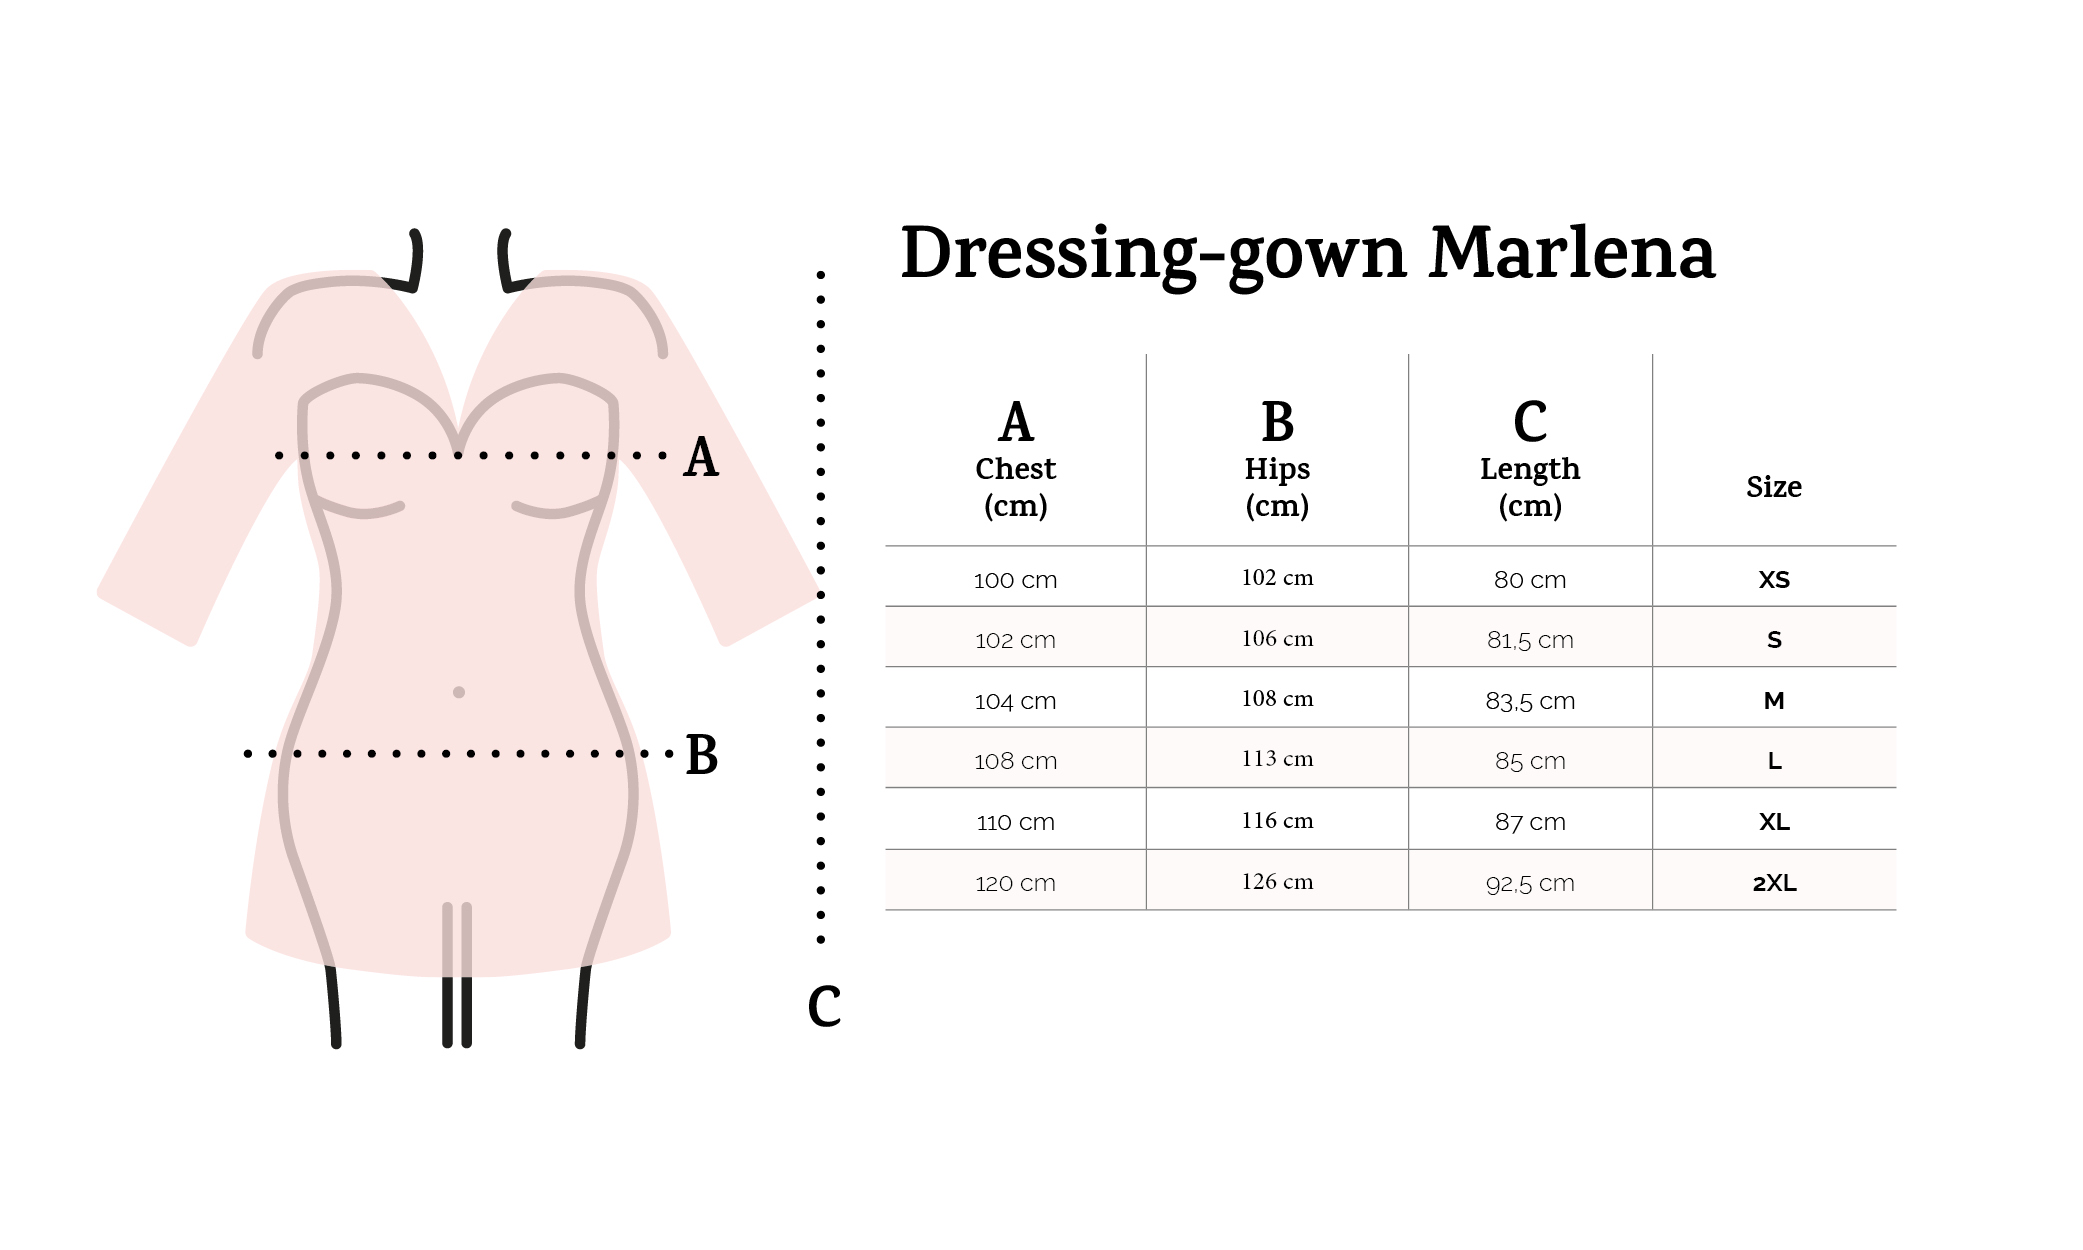 Dressing-gown Marlena